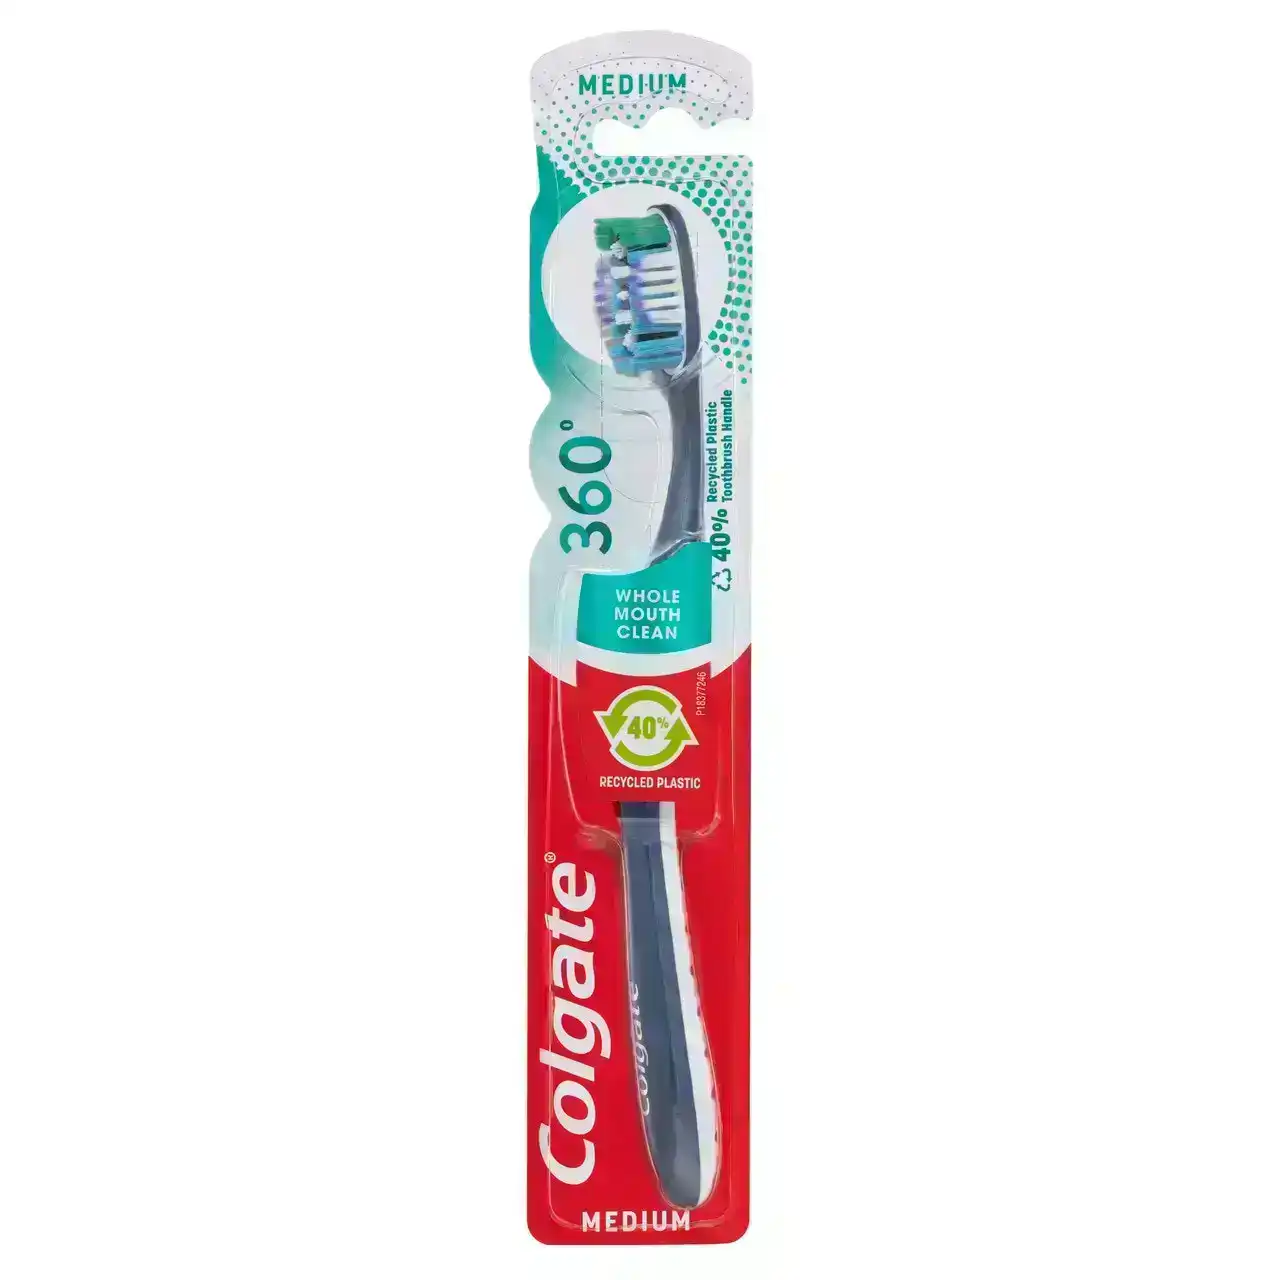 Colgate 360o Whole Mouth Clean Manual Toothbrush, 1 Pack, Medium Bristles